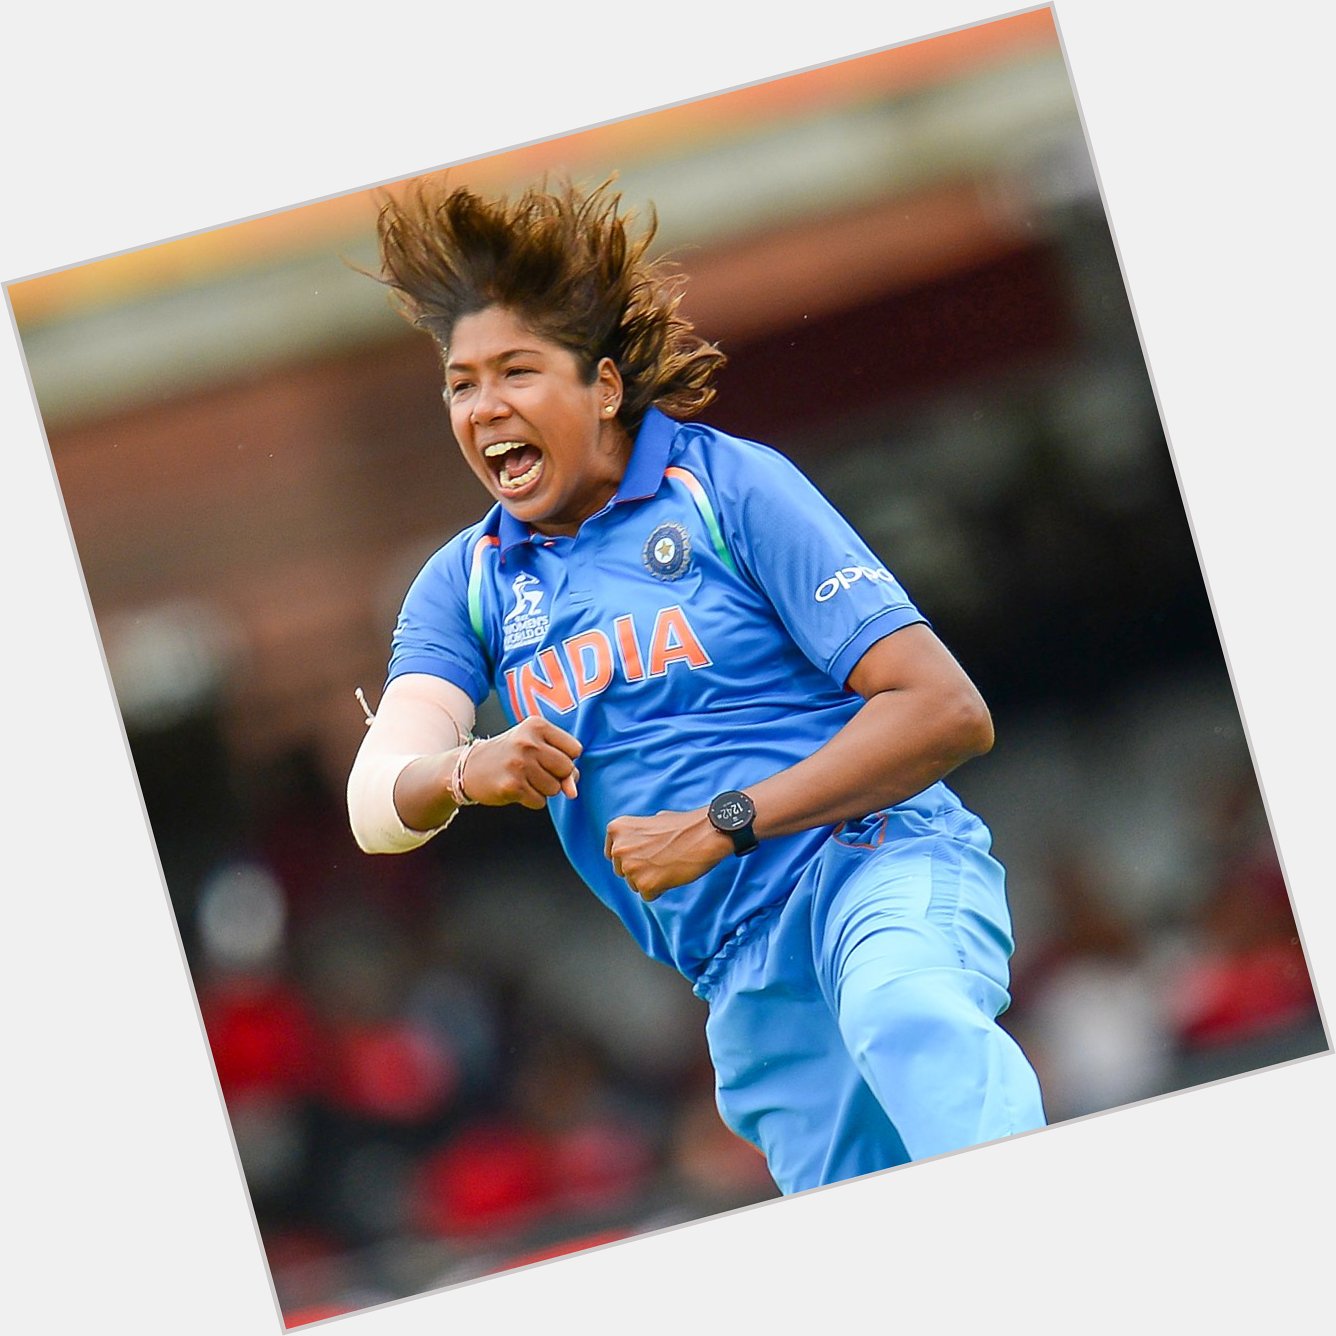   Indian women\s ODI highest wicket taker jhulan Goswami happy birthday   